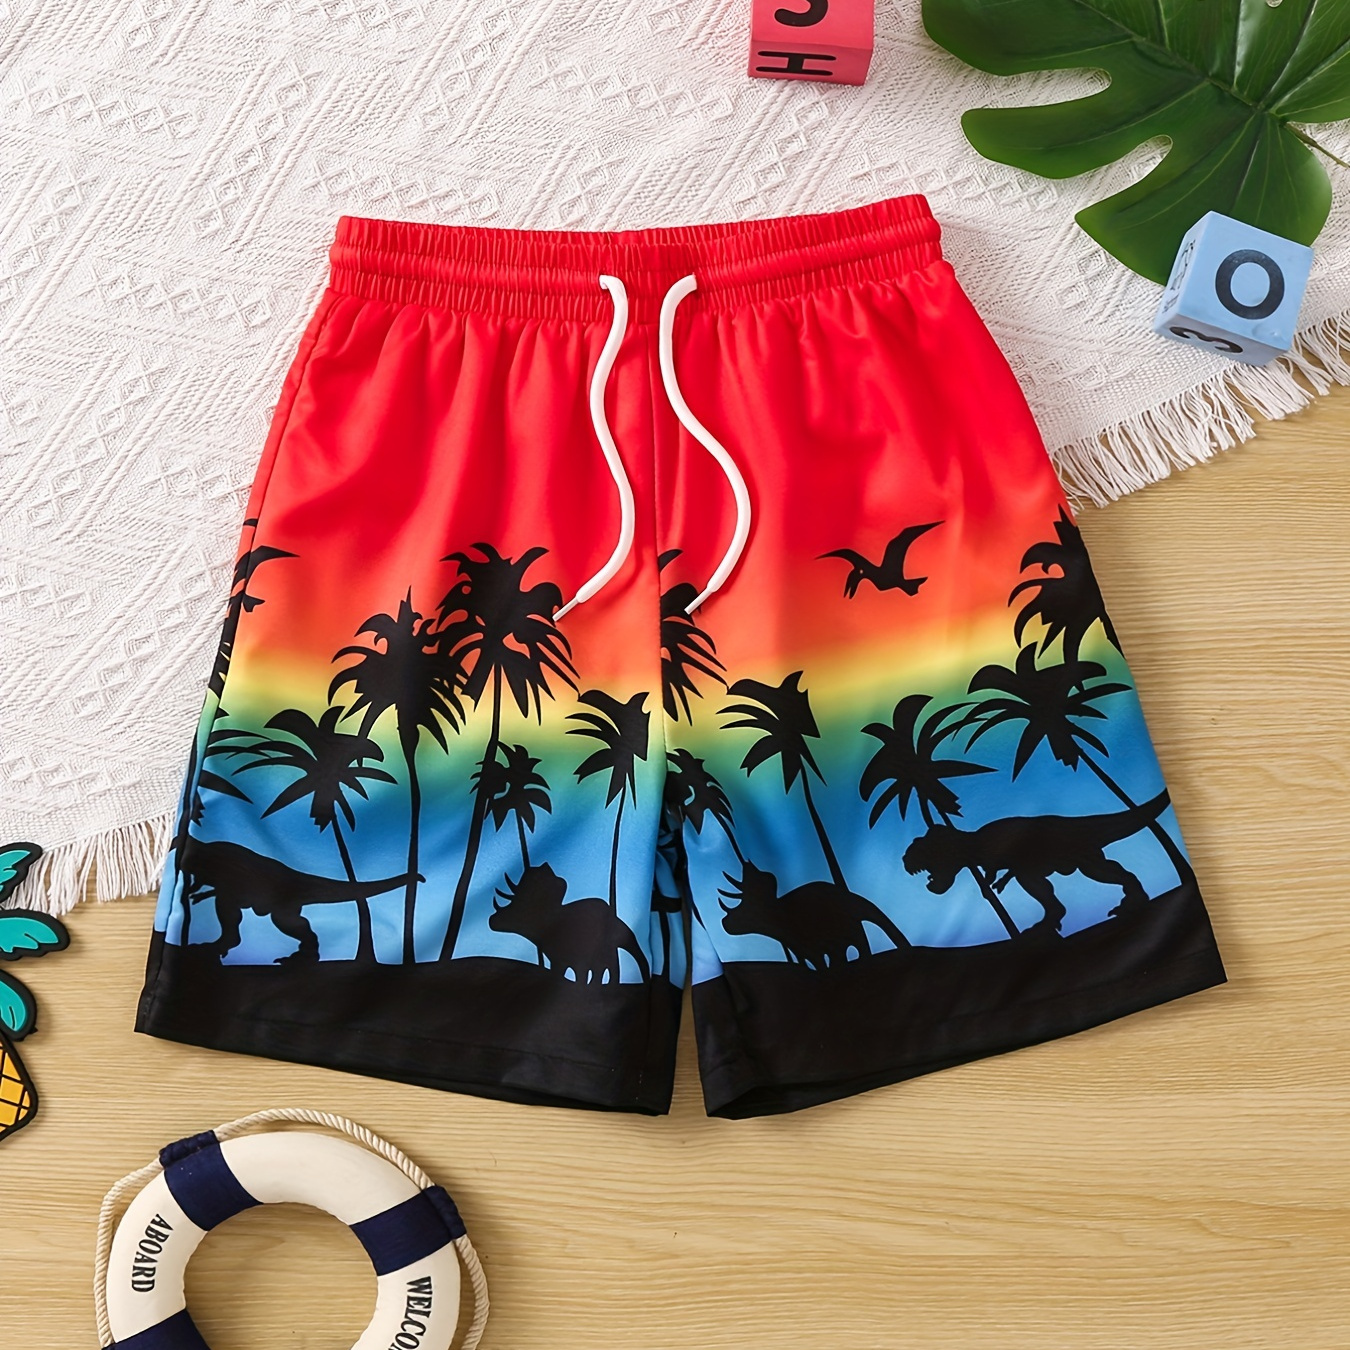 

Boys Swim Trunks Coconut Trees Dinosaur Print Elastic Waist Drawstring Beach Pants Swim Shorts Stretchy Comfortable Kids Clothes Vacation Summer